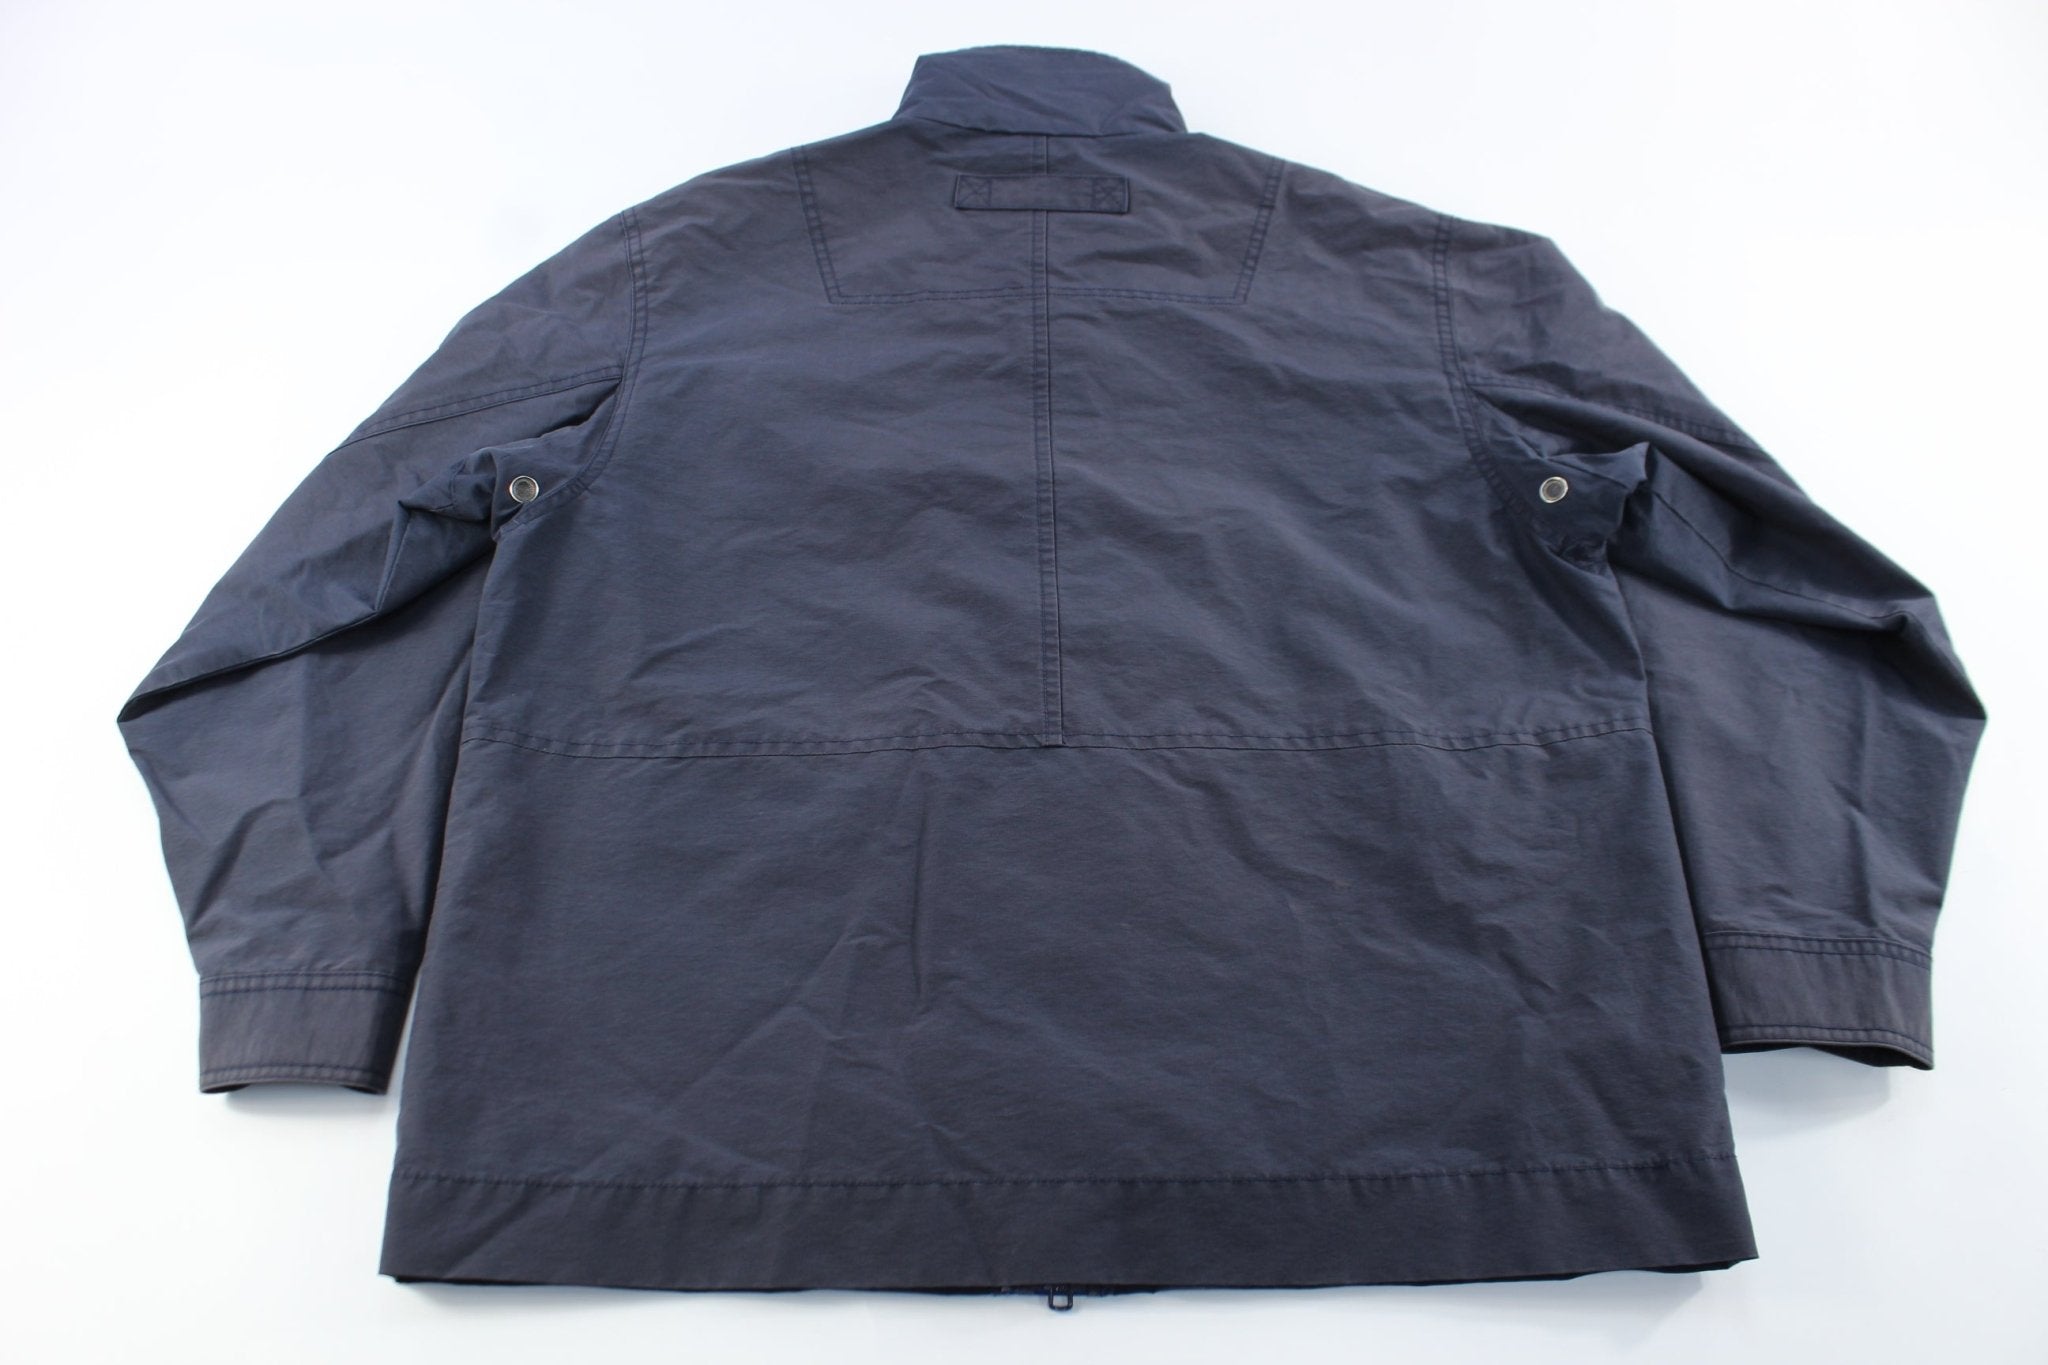 90's Tommy Hilfiger Navy Blue Zip Up Jacket - ThriftedThreads.com